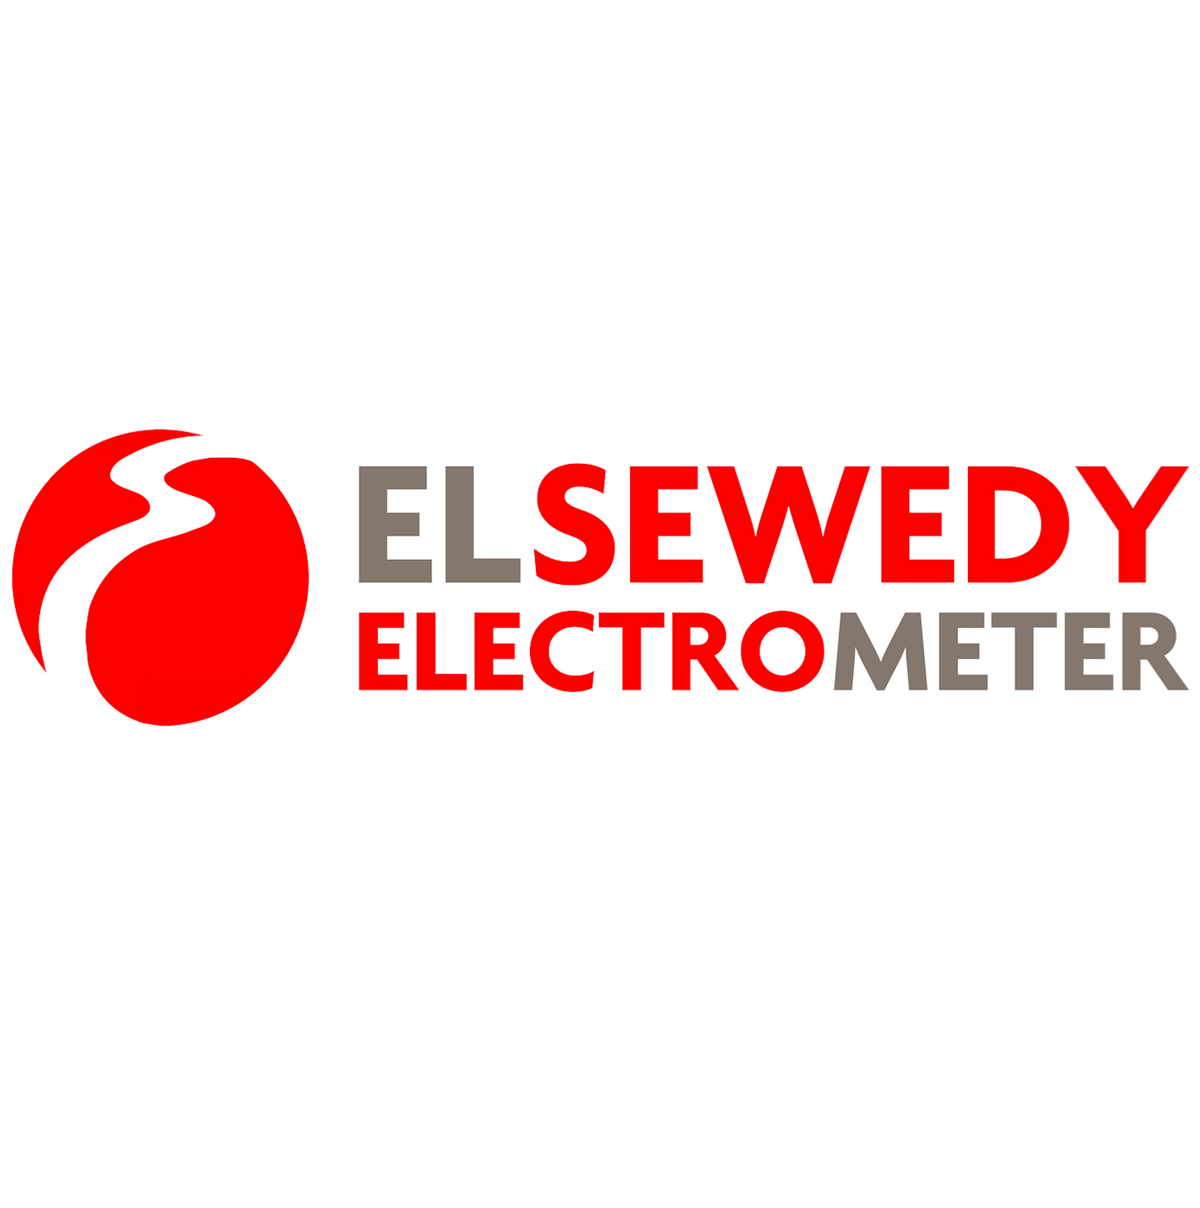 EL Sewedy Electrometer